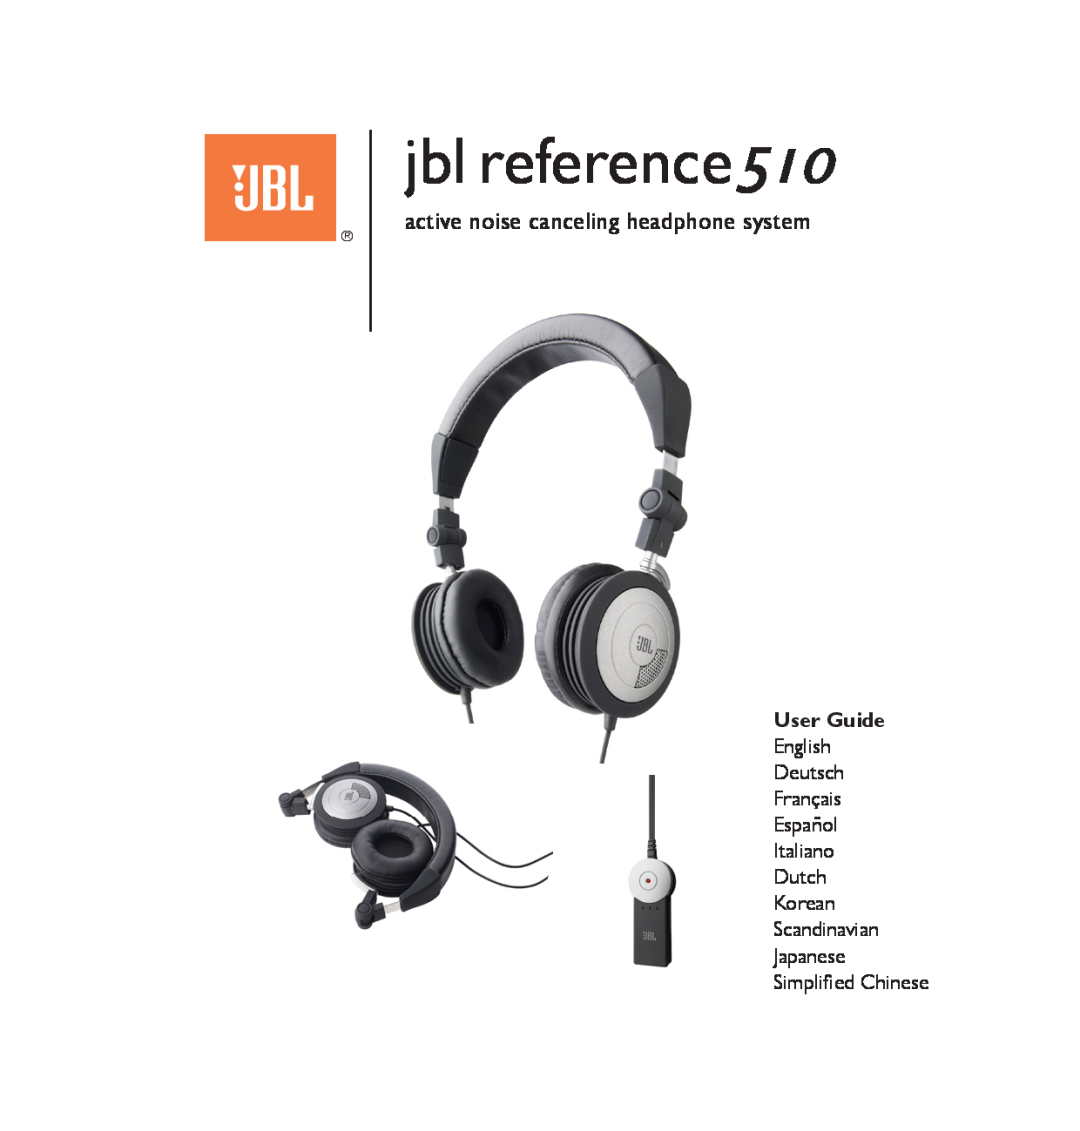 JBL manual jbl reference510, active noise canceling headphone system, User Guide 